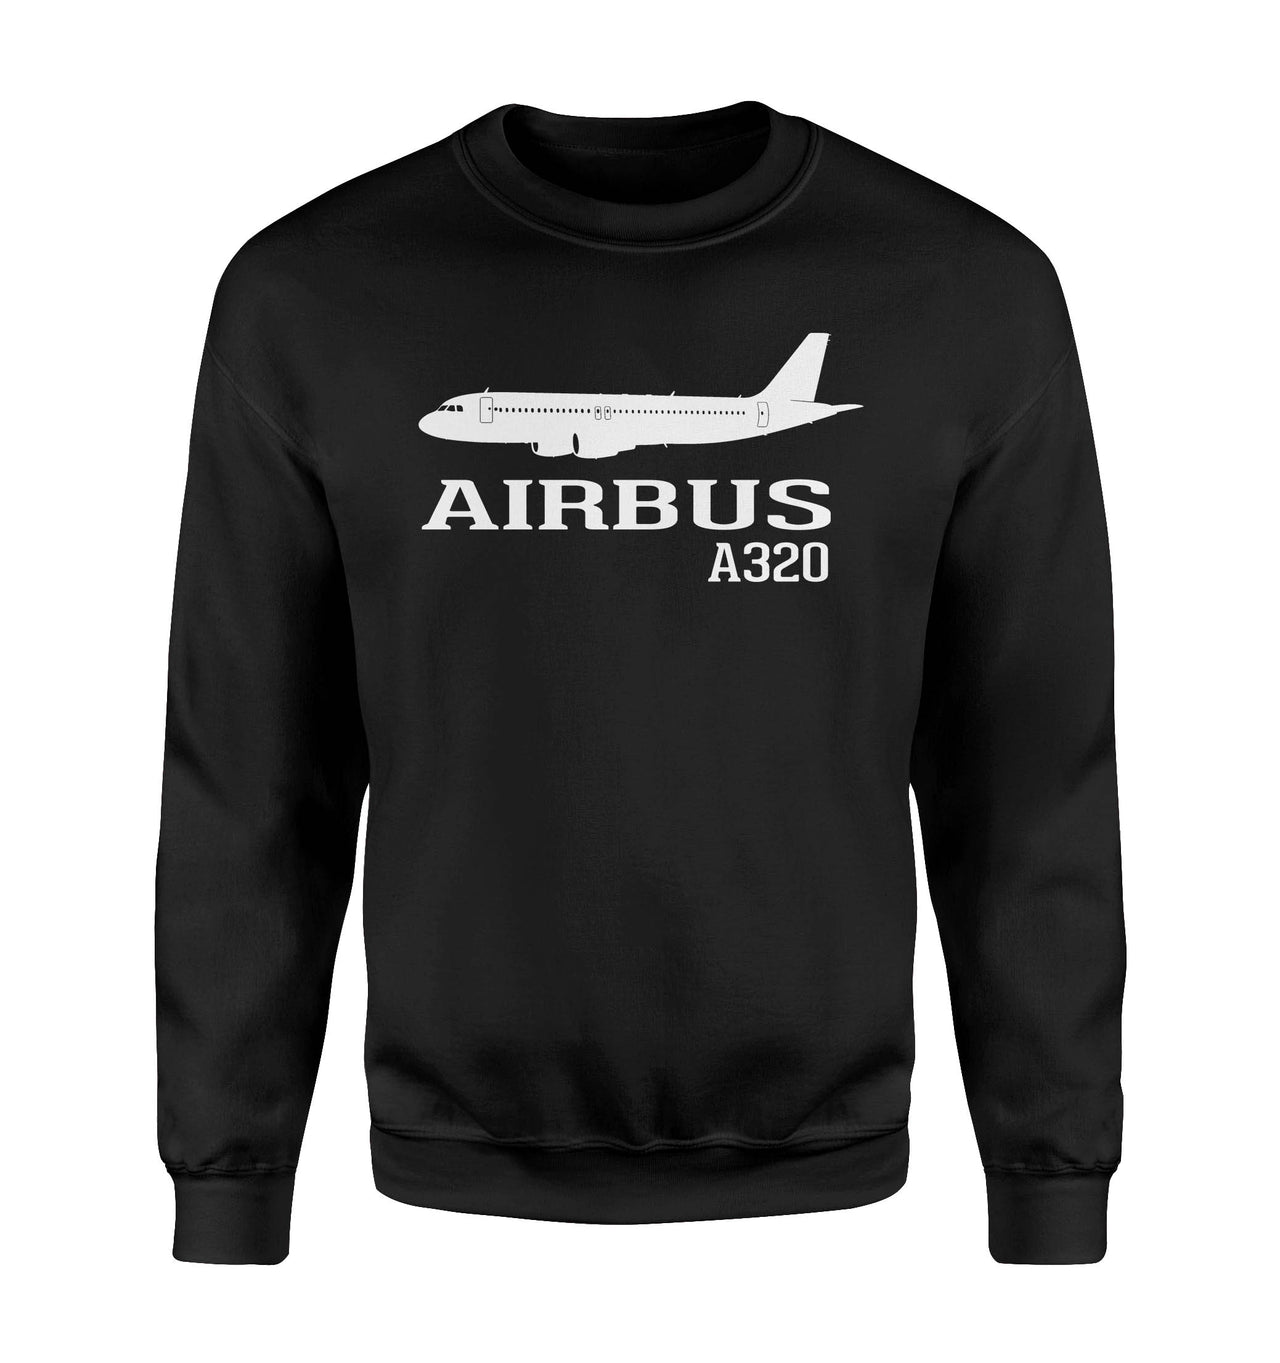 Airbus A320 Printed Sweatshirts